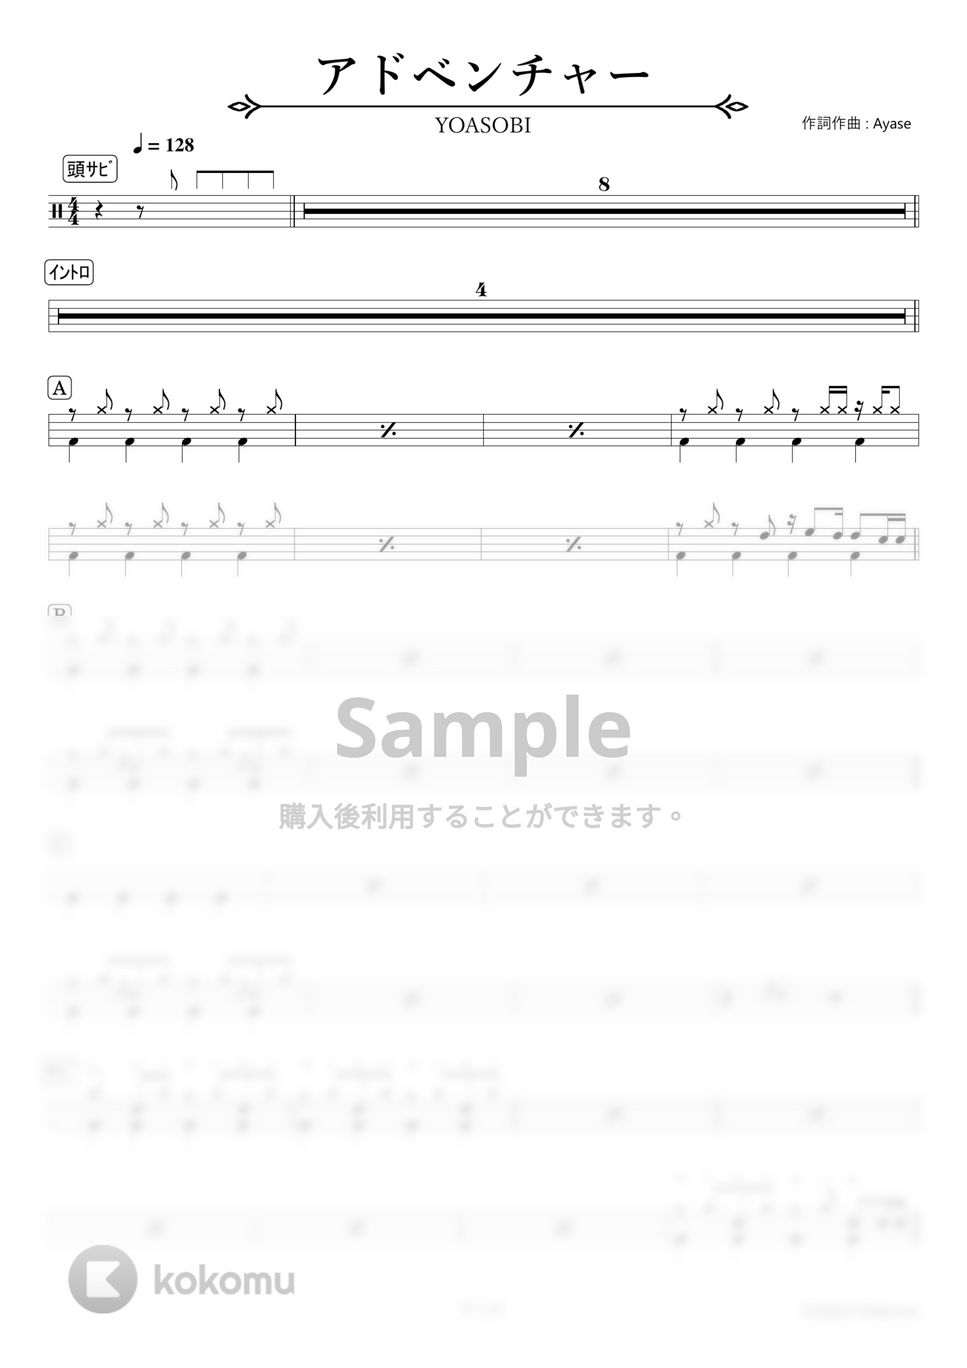 YOASOBI - アドベンチャー【ドラム楽譜】 by HYdrums